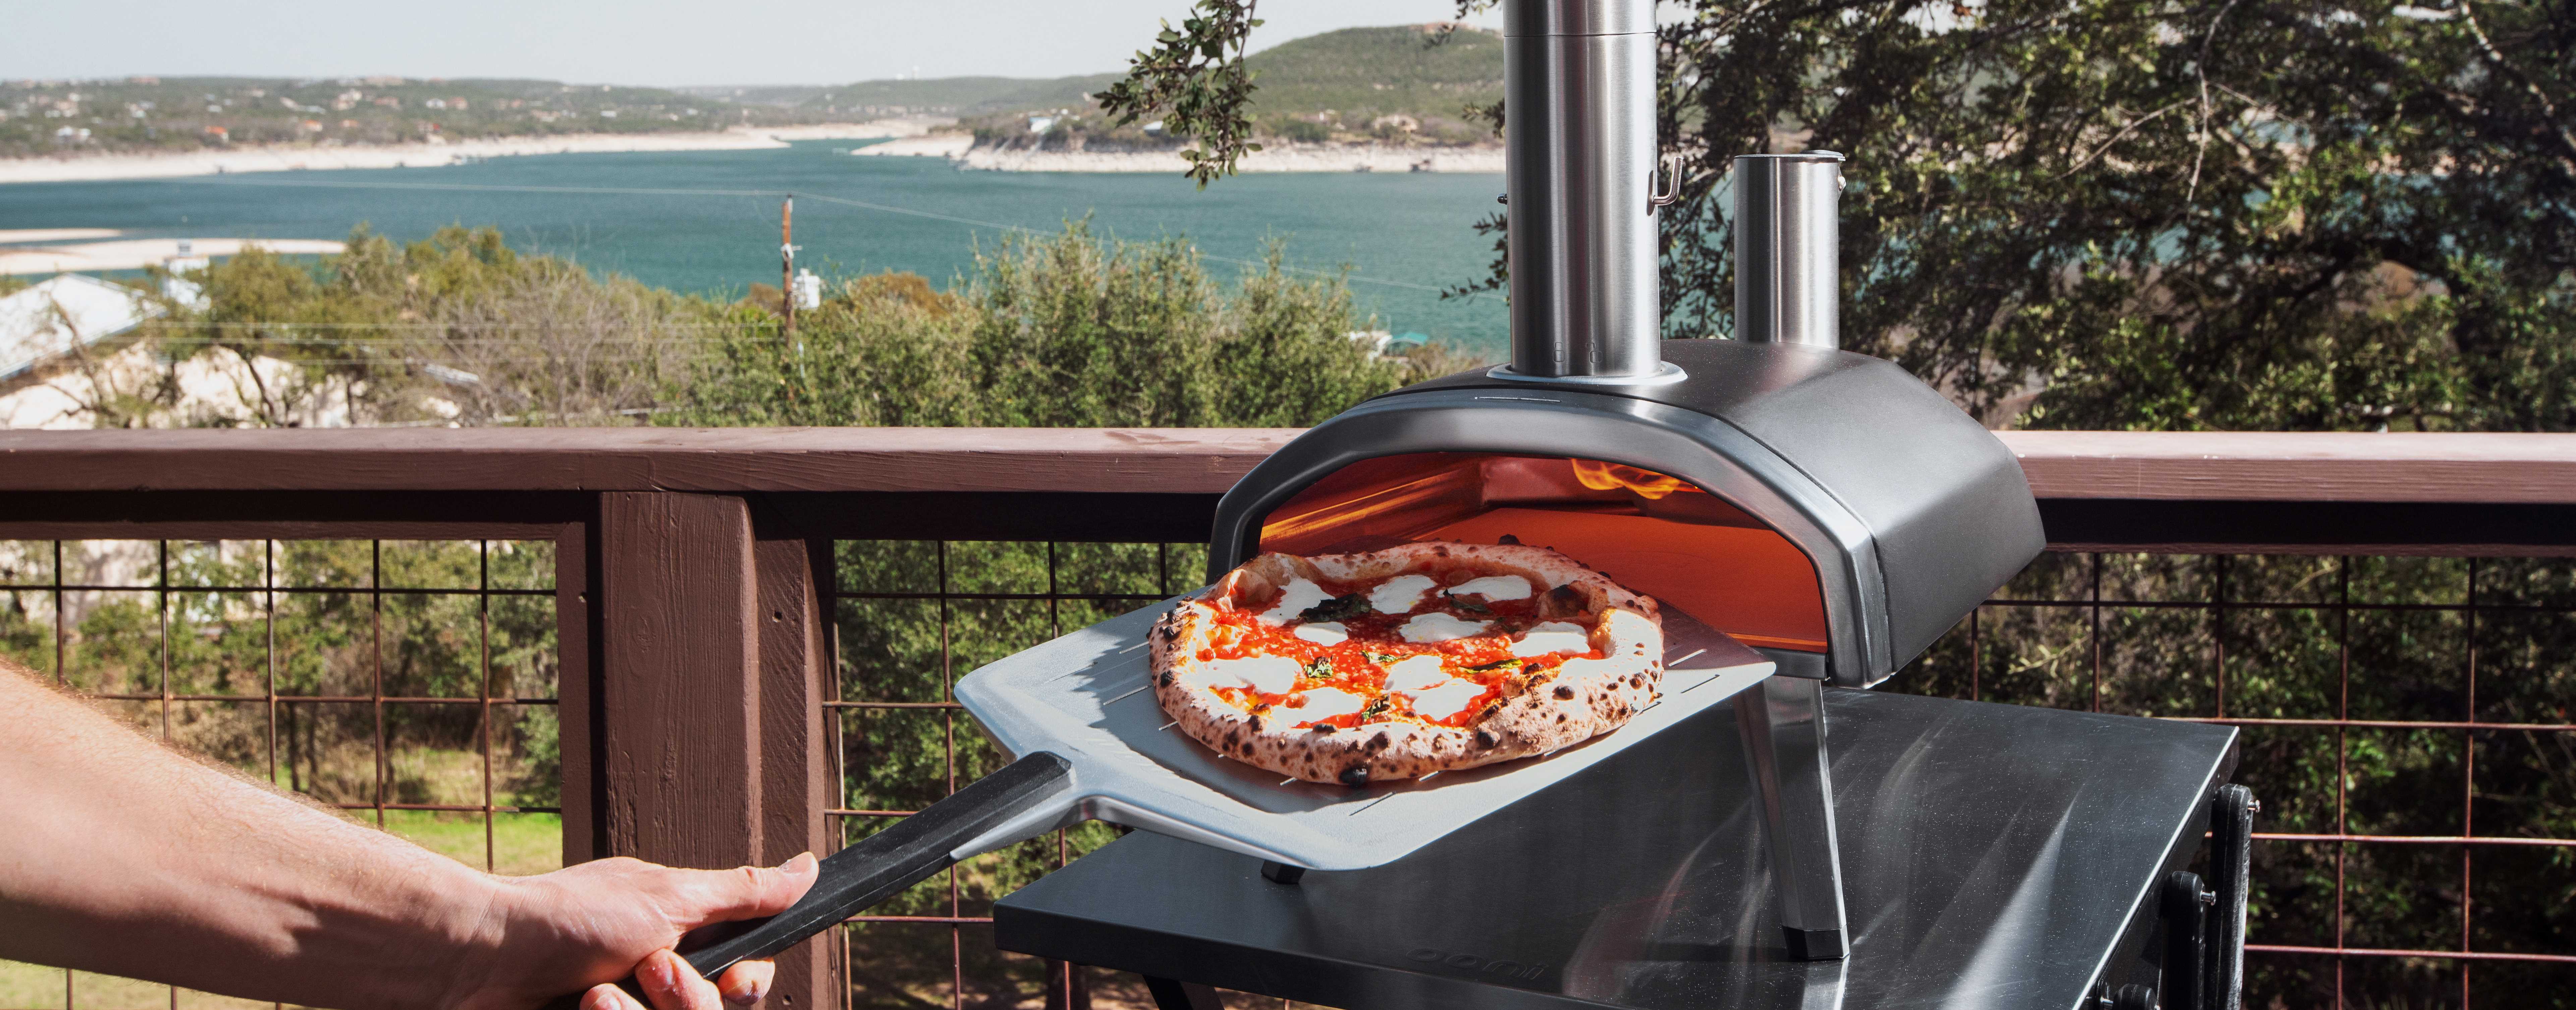 Ooni Ooni Fyra 12 Wood Pellet Pizza Oven - Black/Silver, Backyard